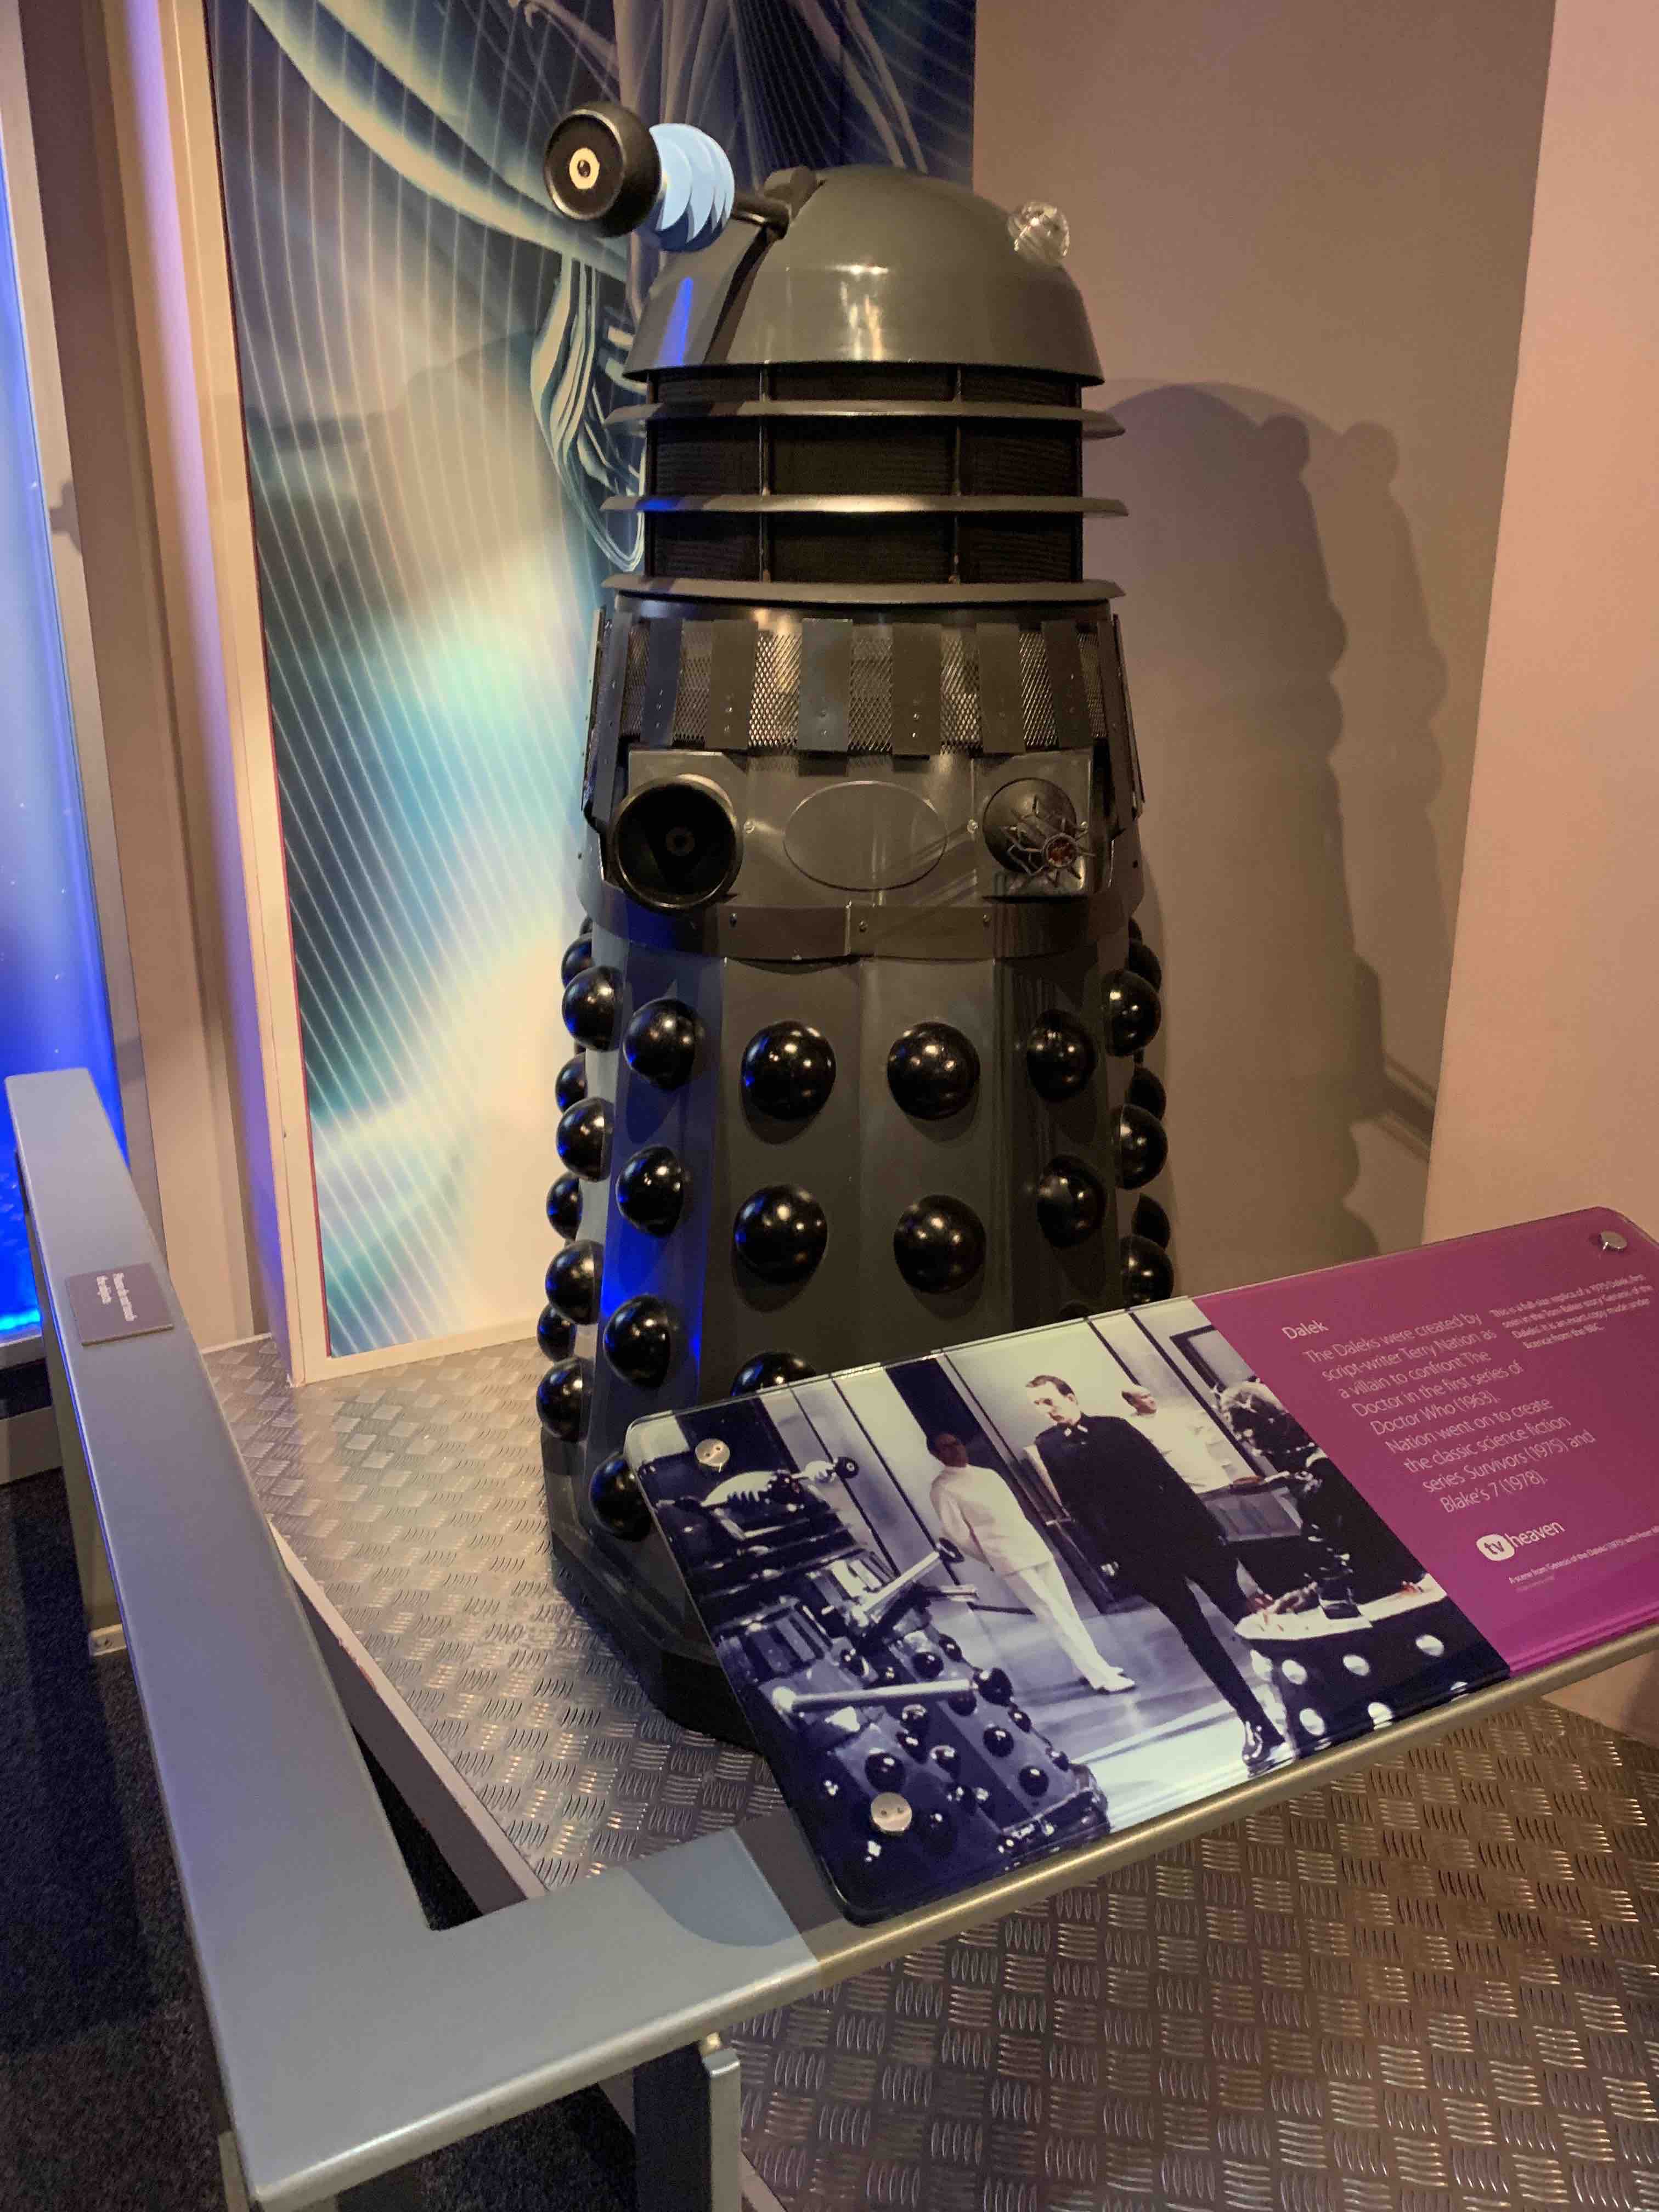 Dalek exhibit in the National Science and Media Museum, Bradford